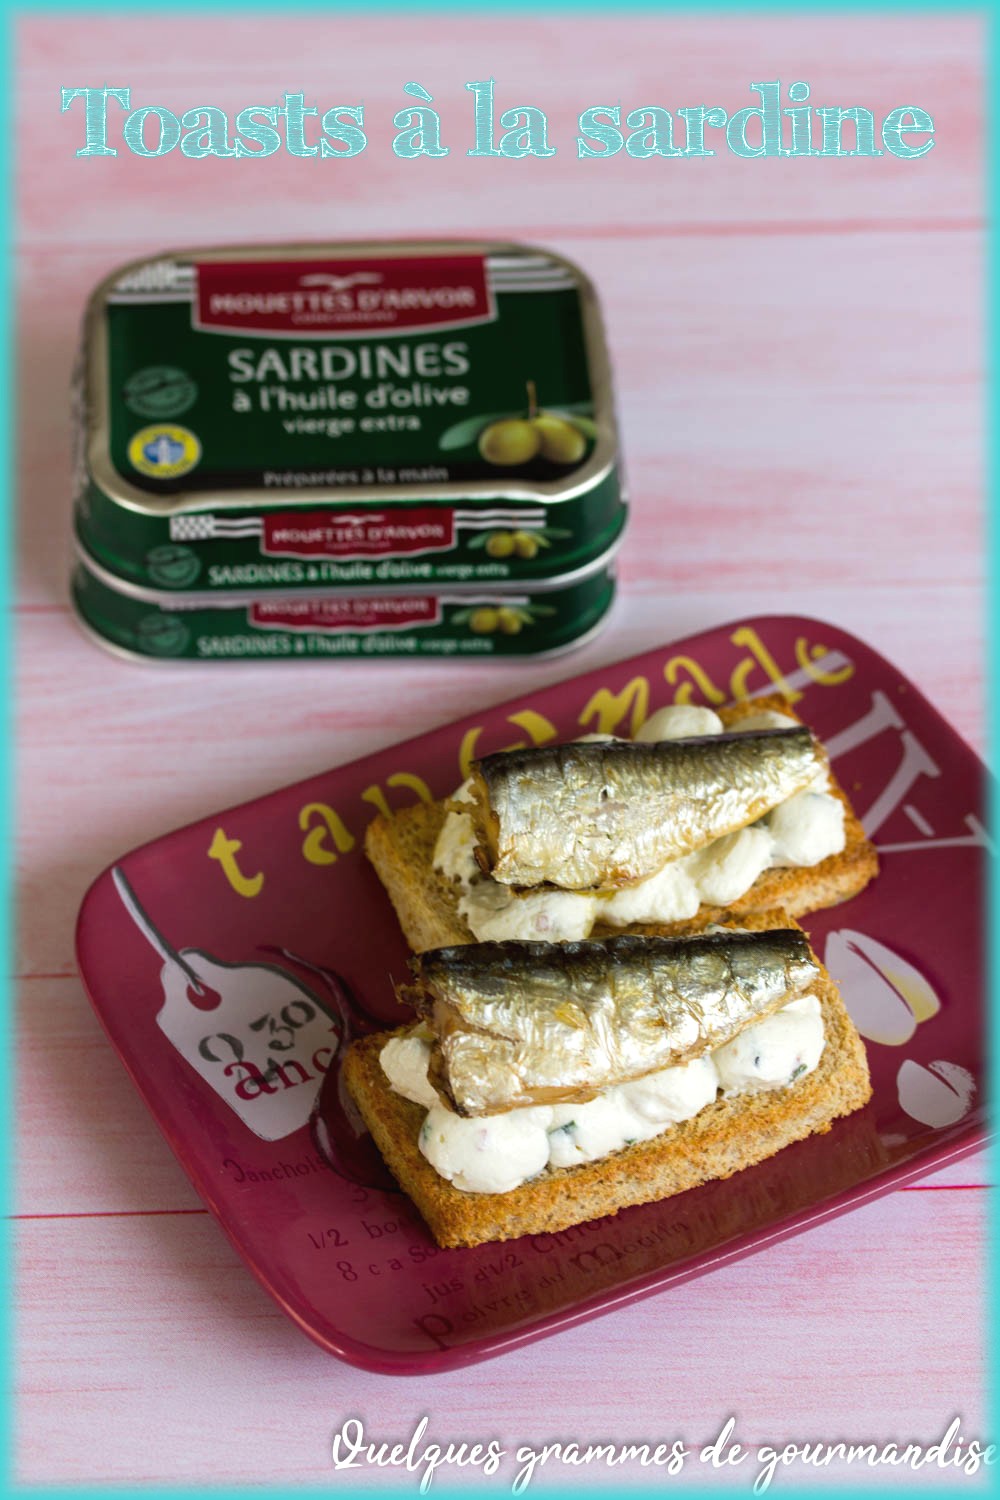 Toasts grillés à la sardine